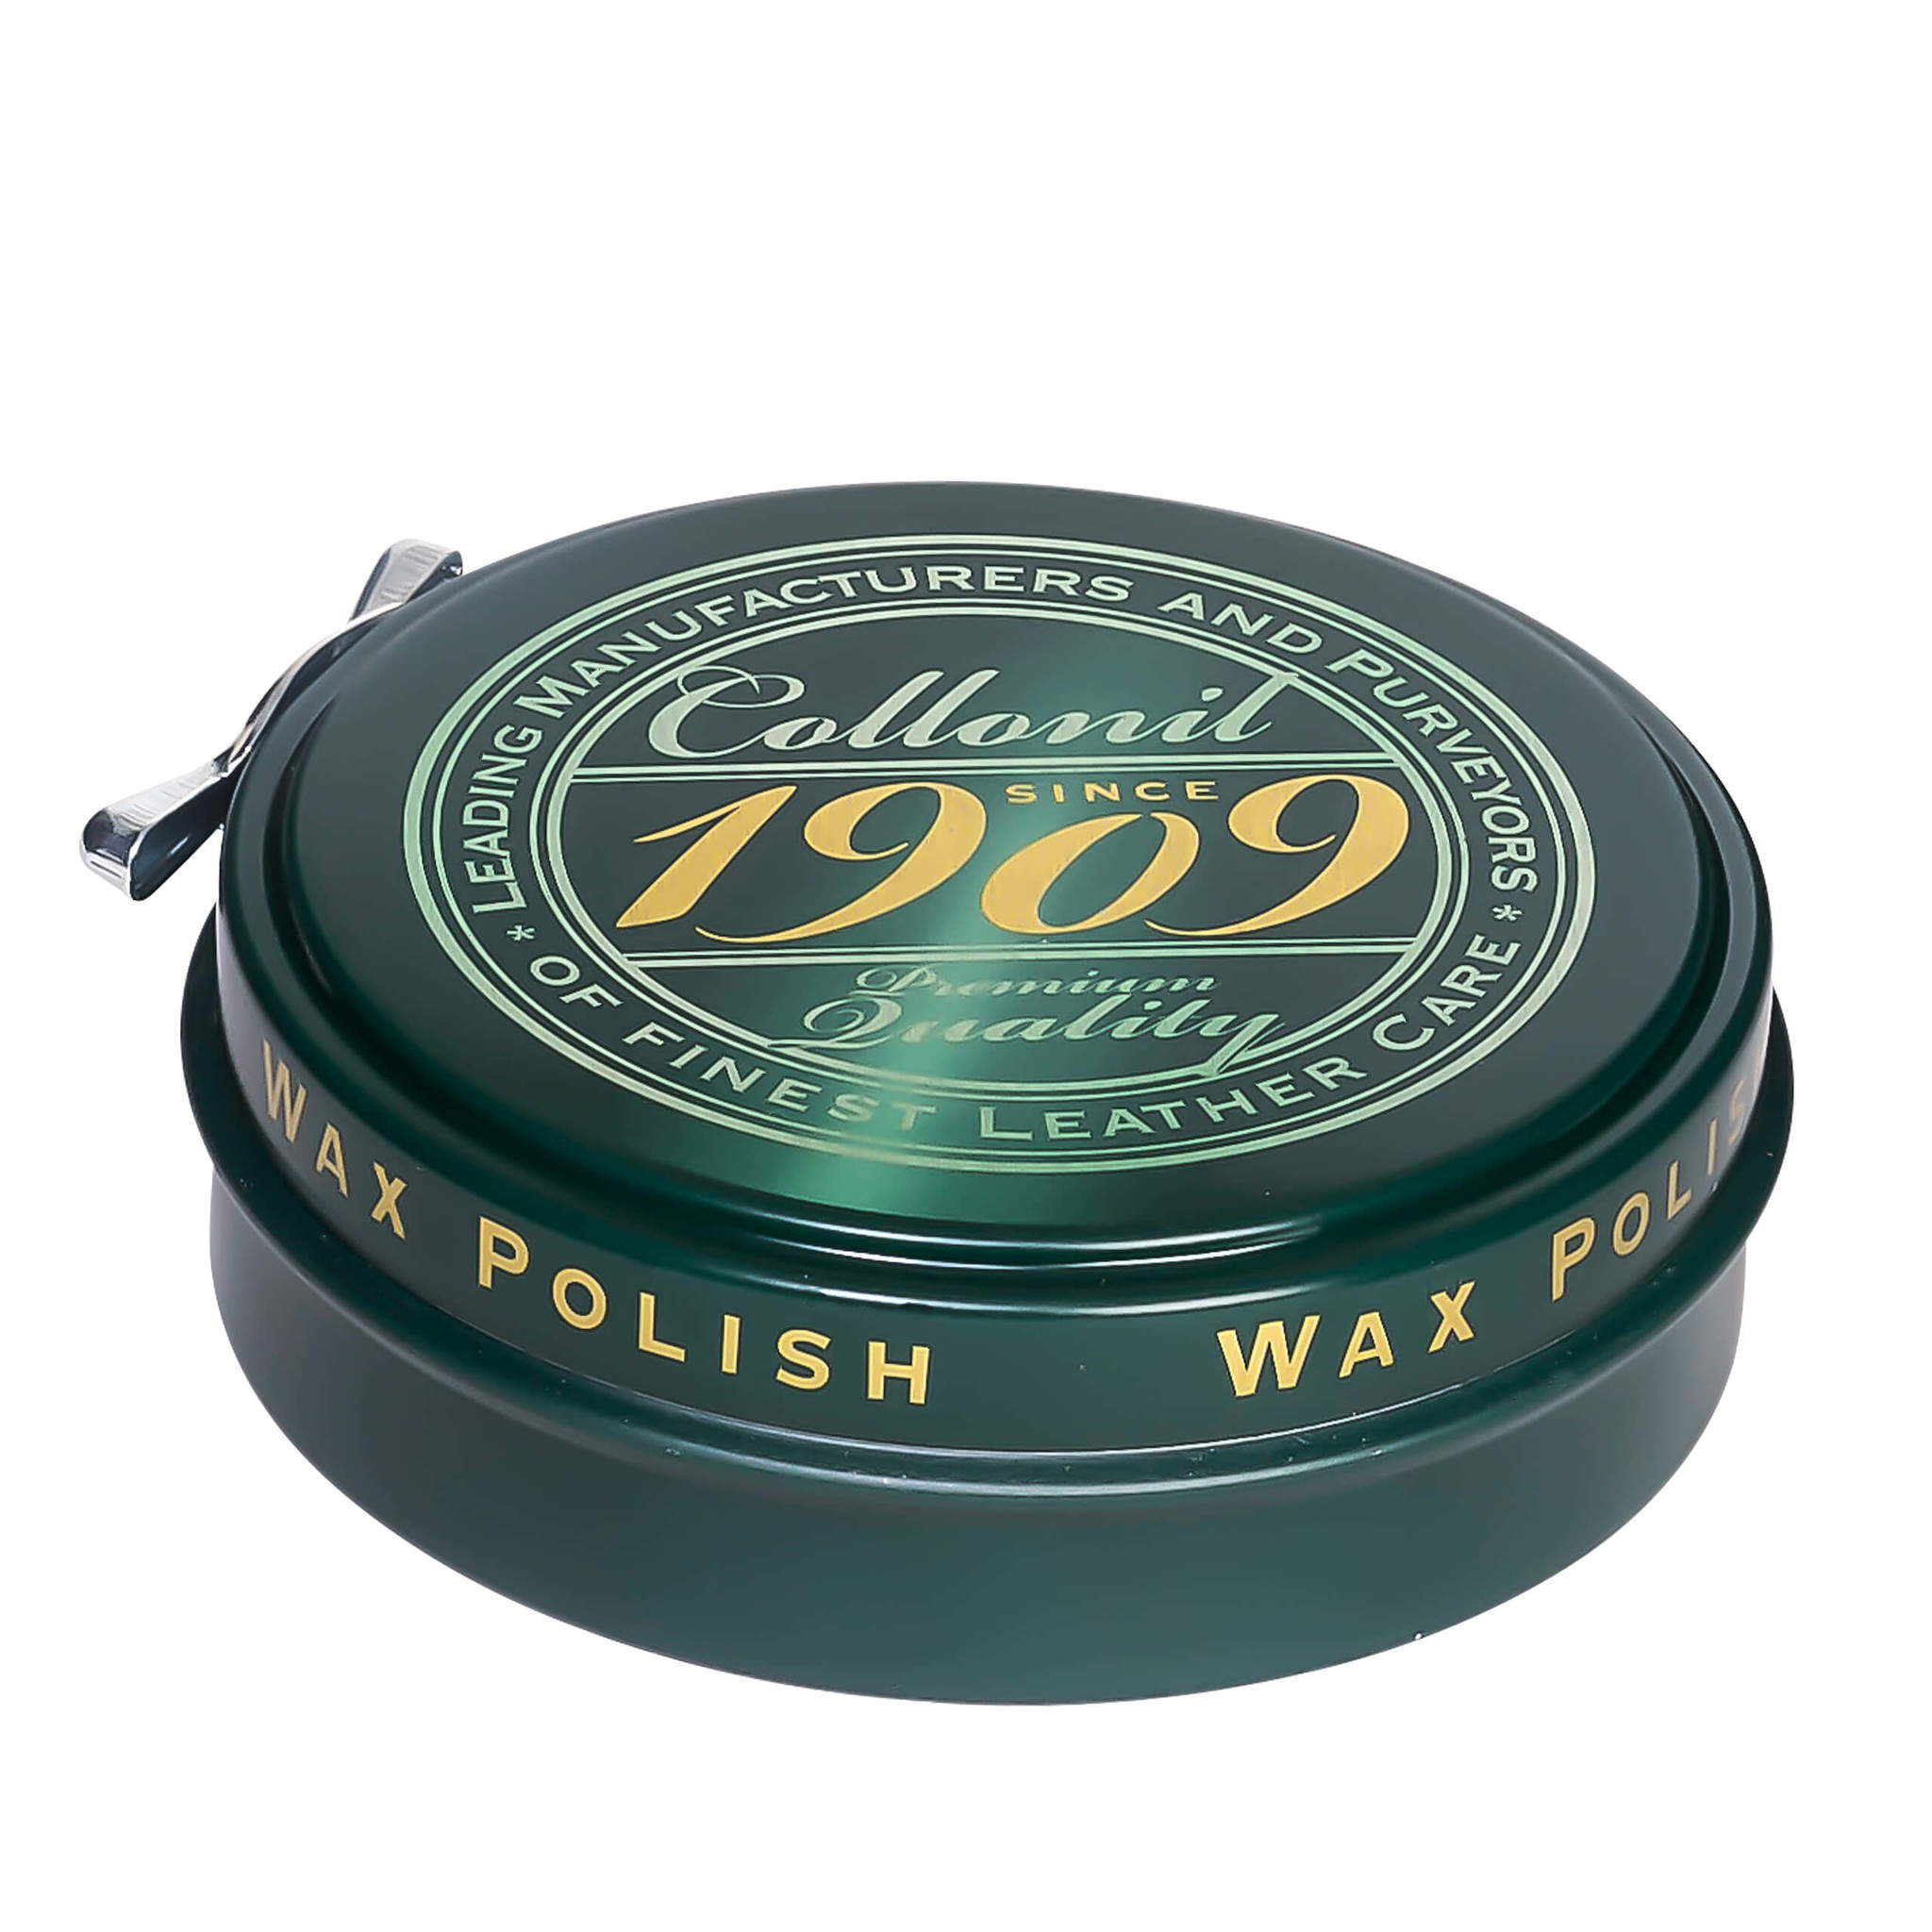 COLLONIL 1909 Collonil 1909 Wax Polish